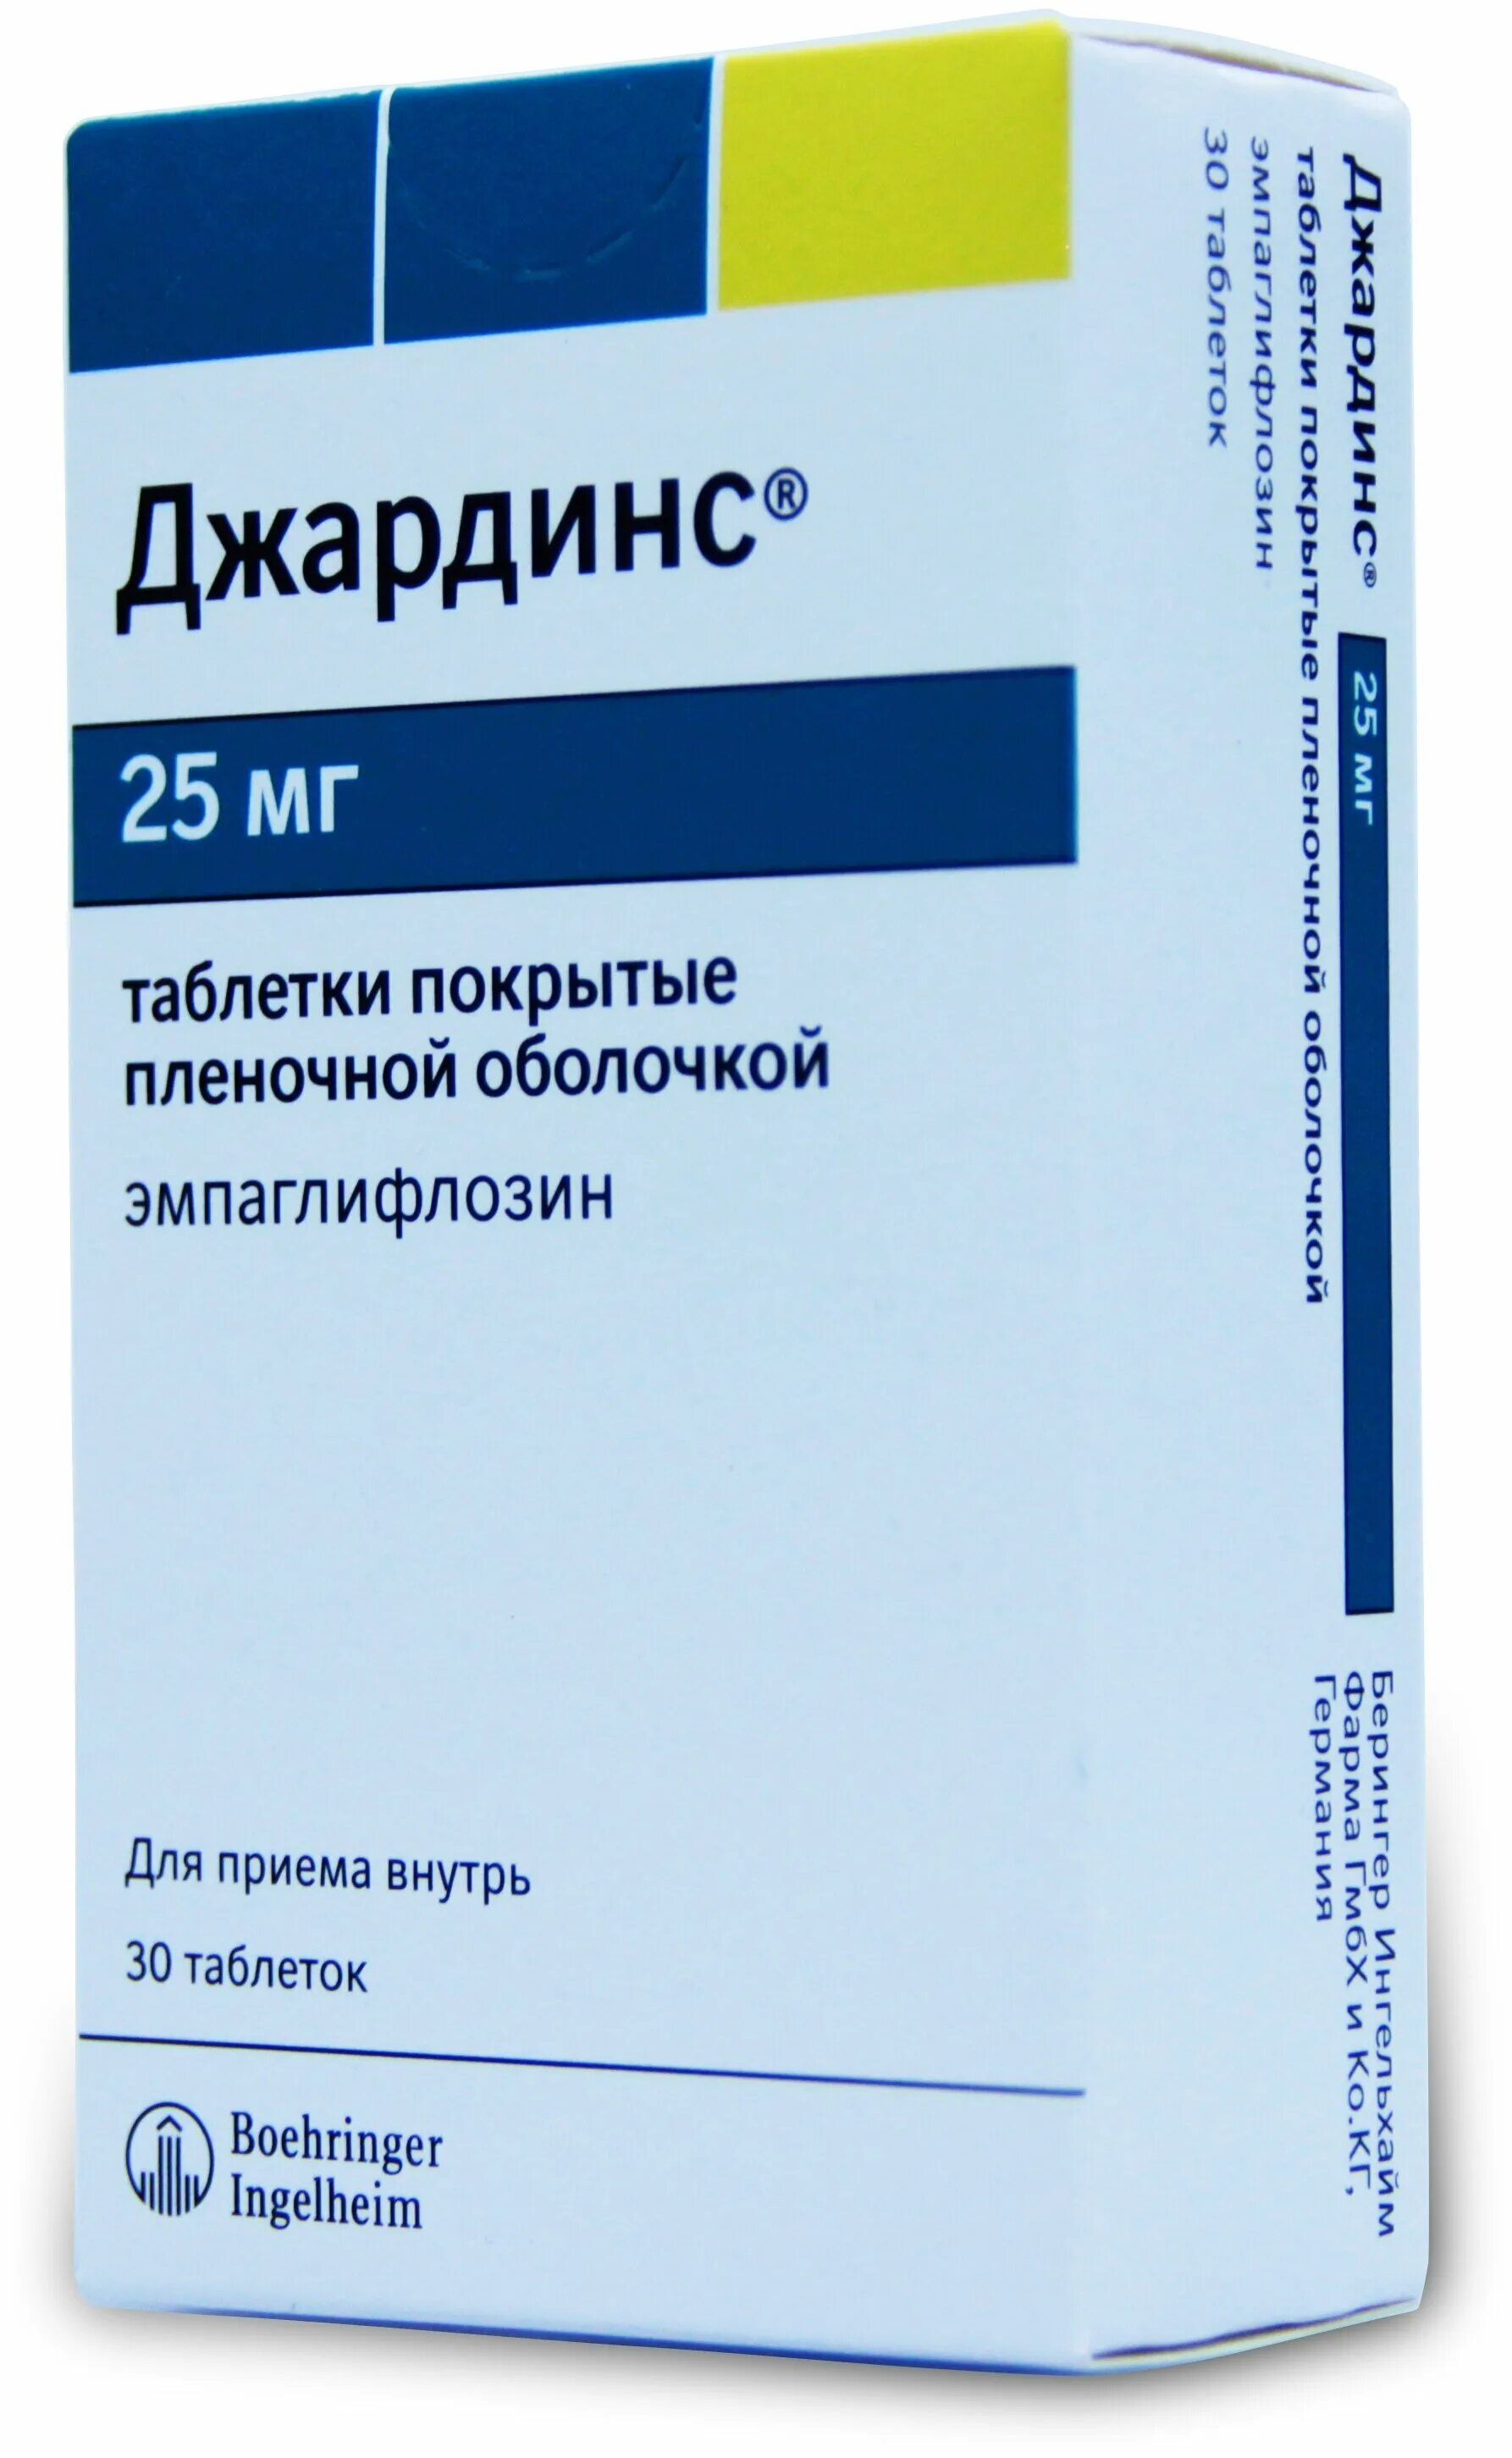 Джардинс таб 25мг. Таблетки Джардинс 25 мг. Джорднис 25 мг таблетки. Эмпаглифлозин Джардинс 25 мг.